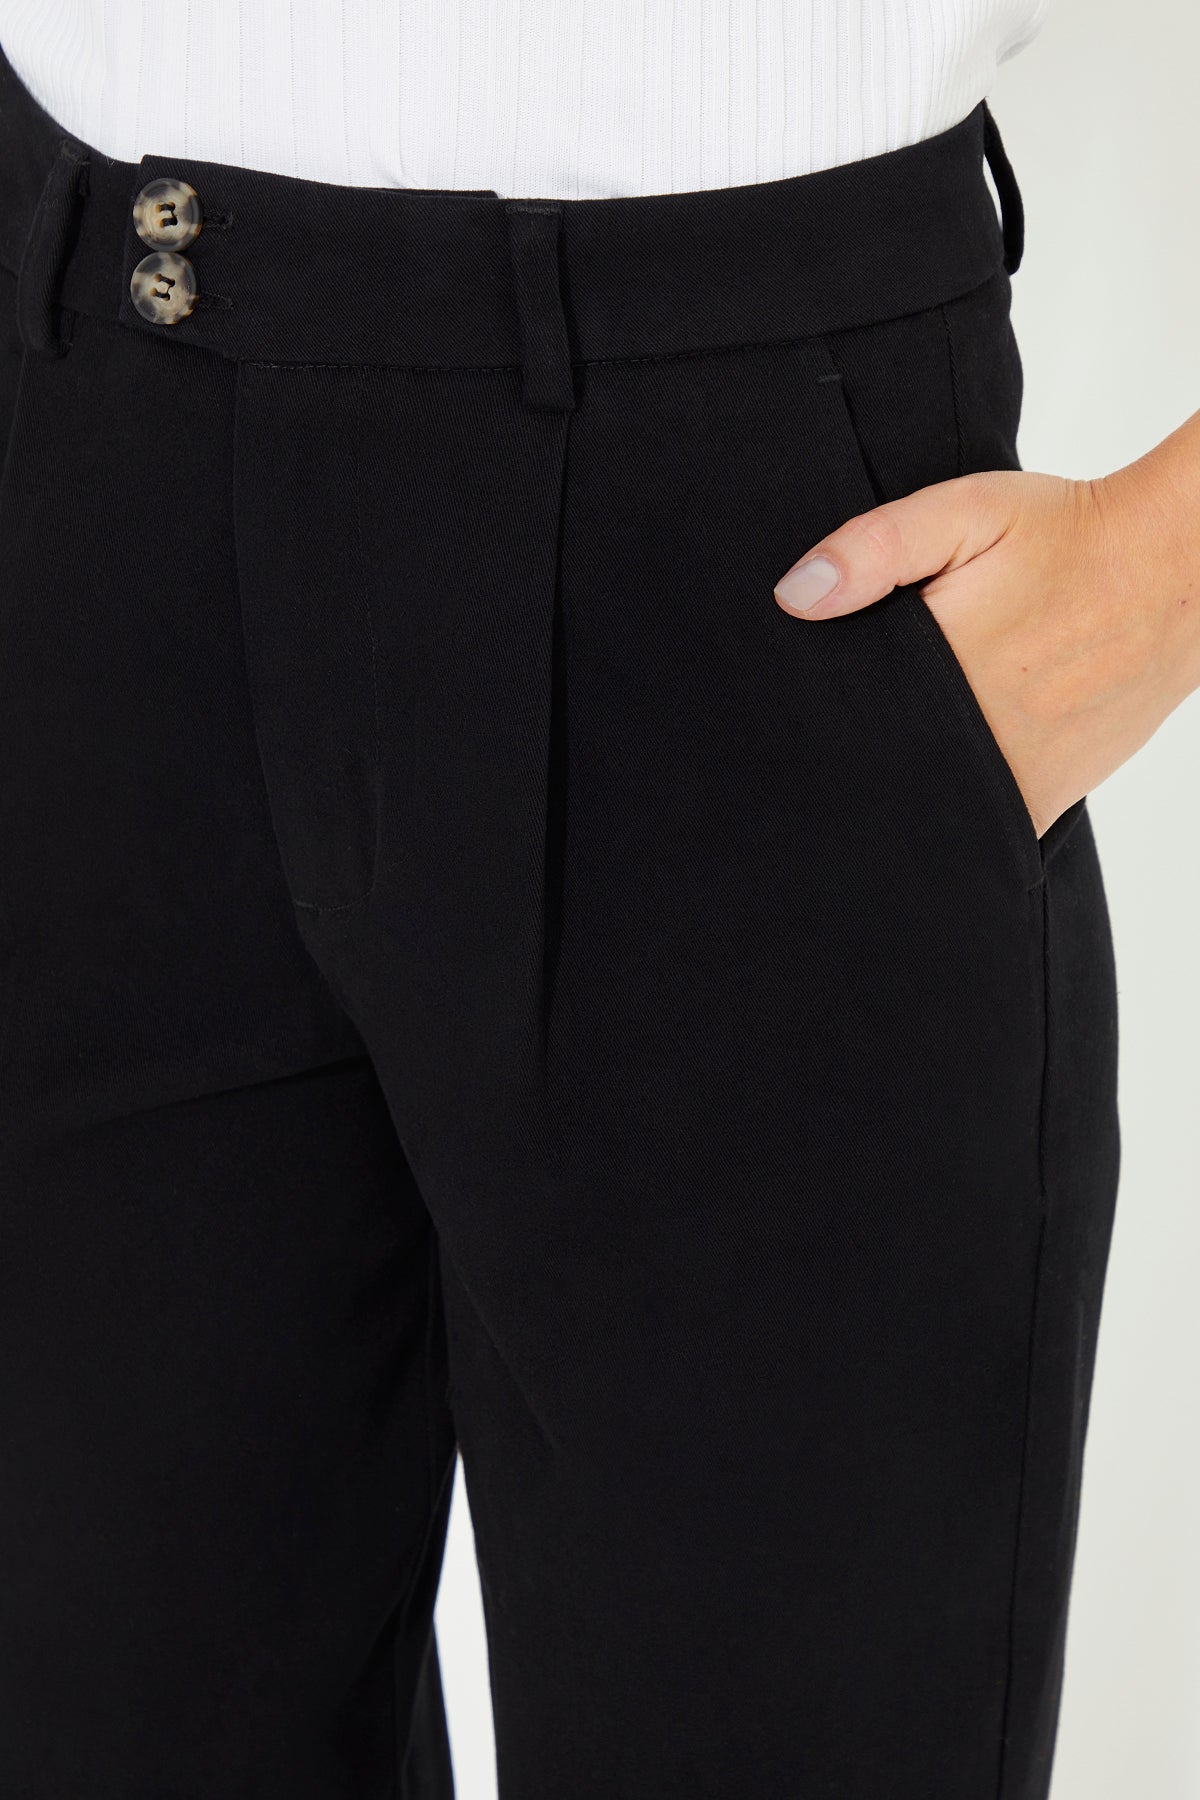 Black High Waist Pleated Women's Trousers